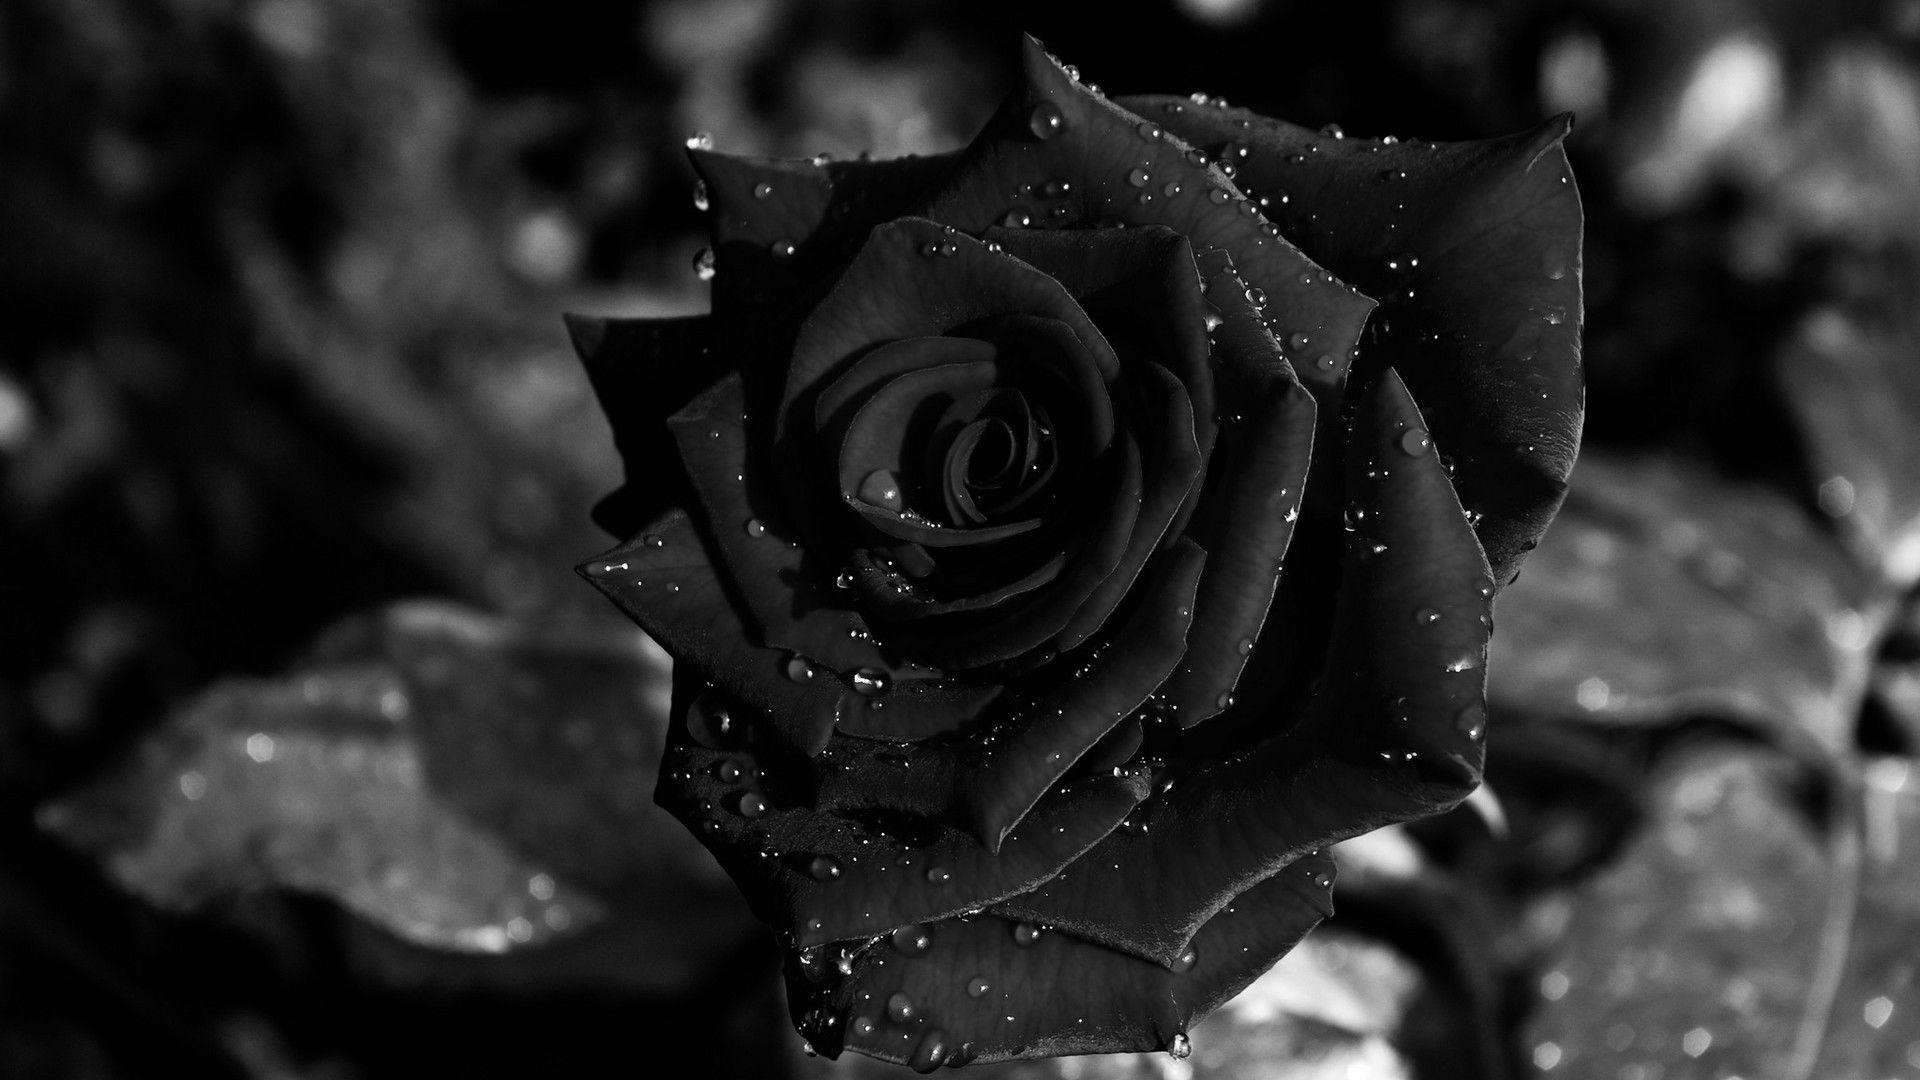 Black Roses Background